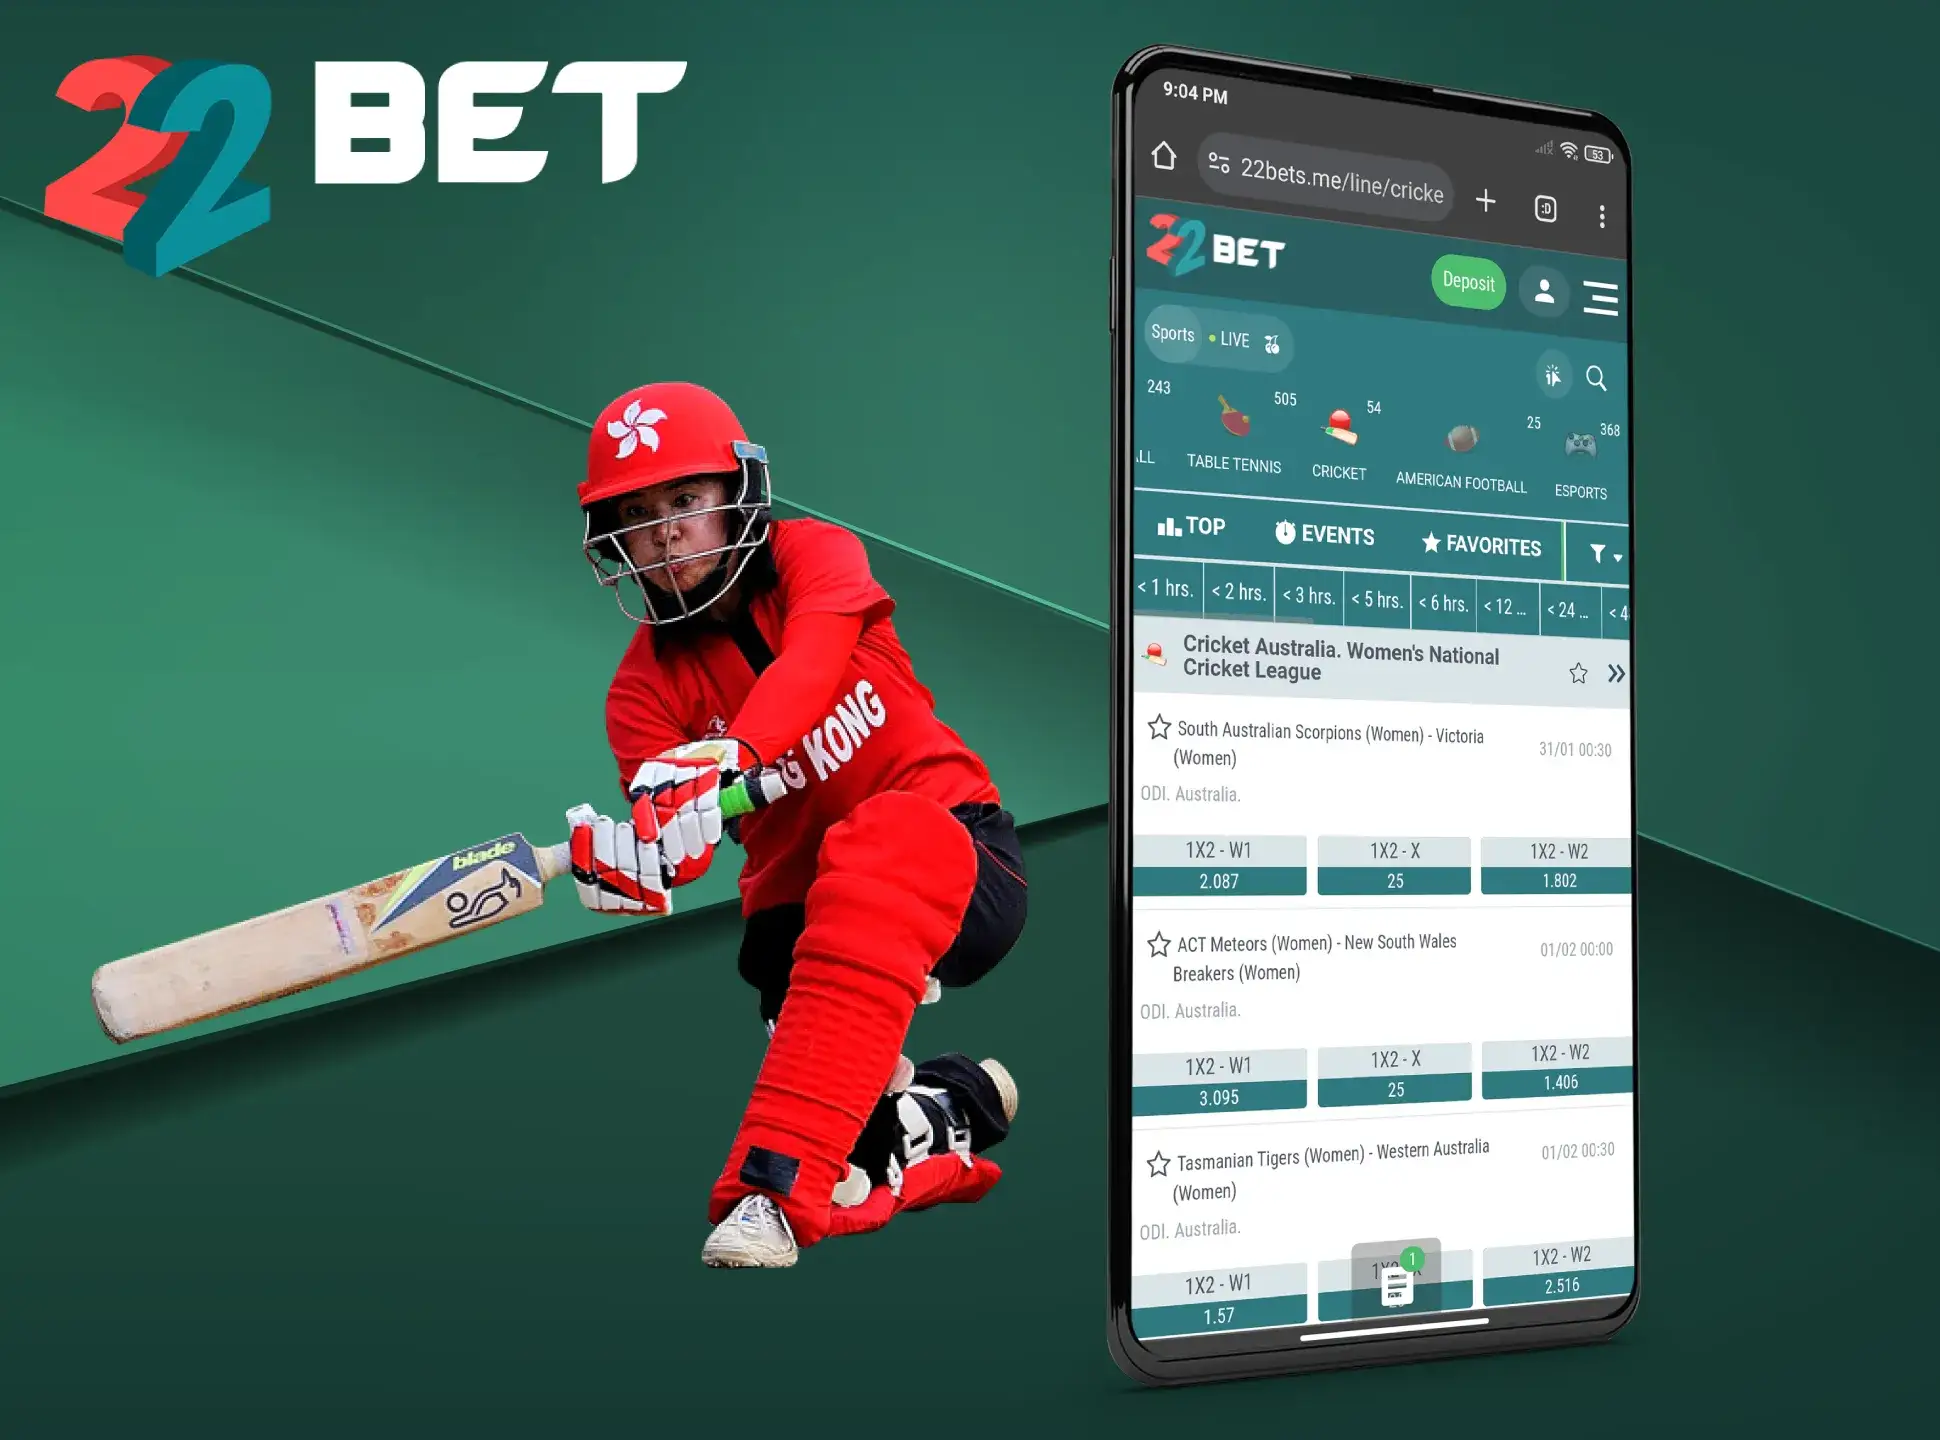 Cricket betting is popular among 22Bet bettors.